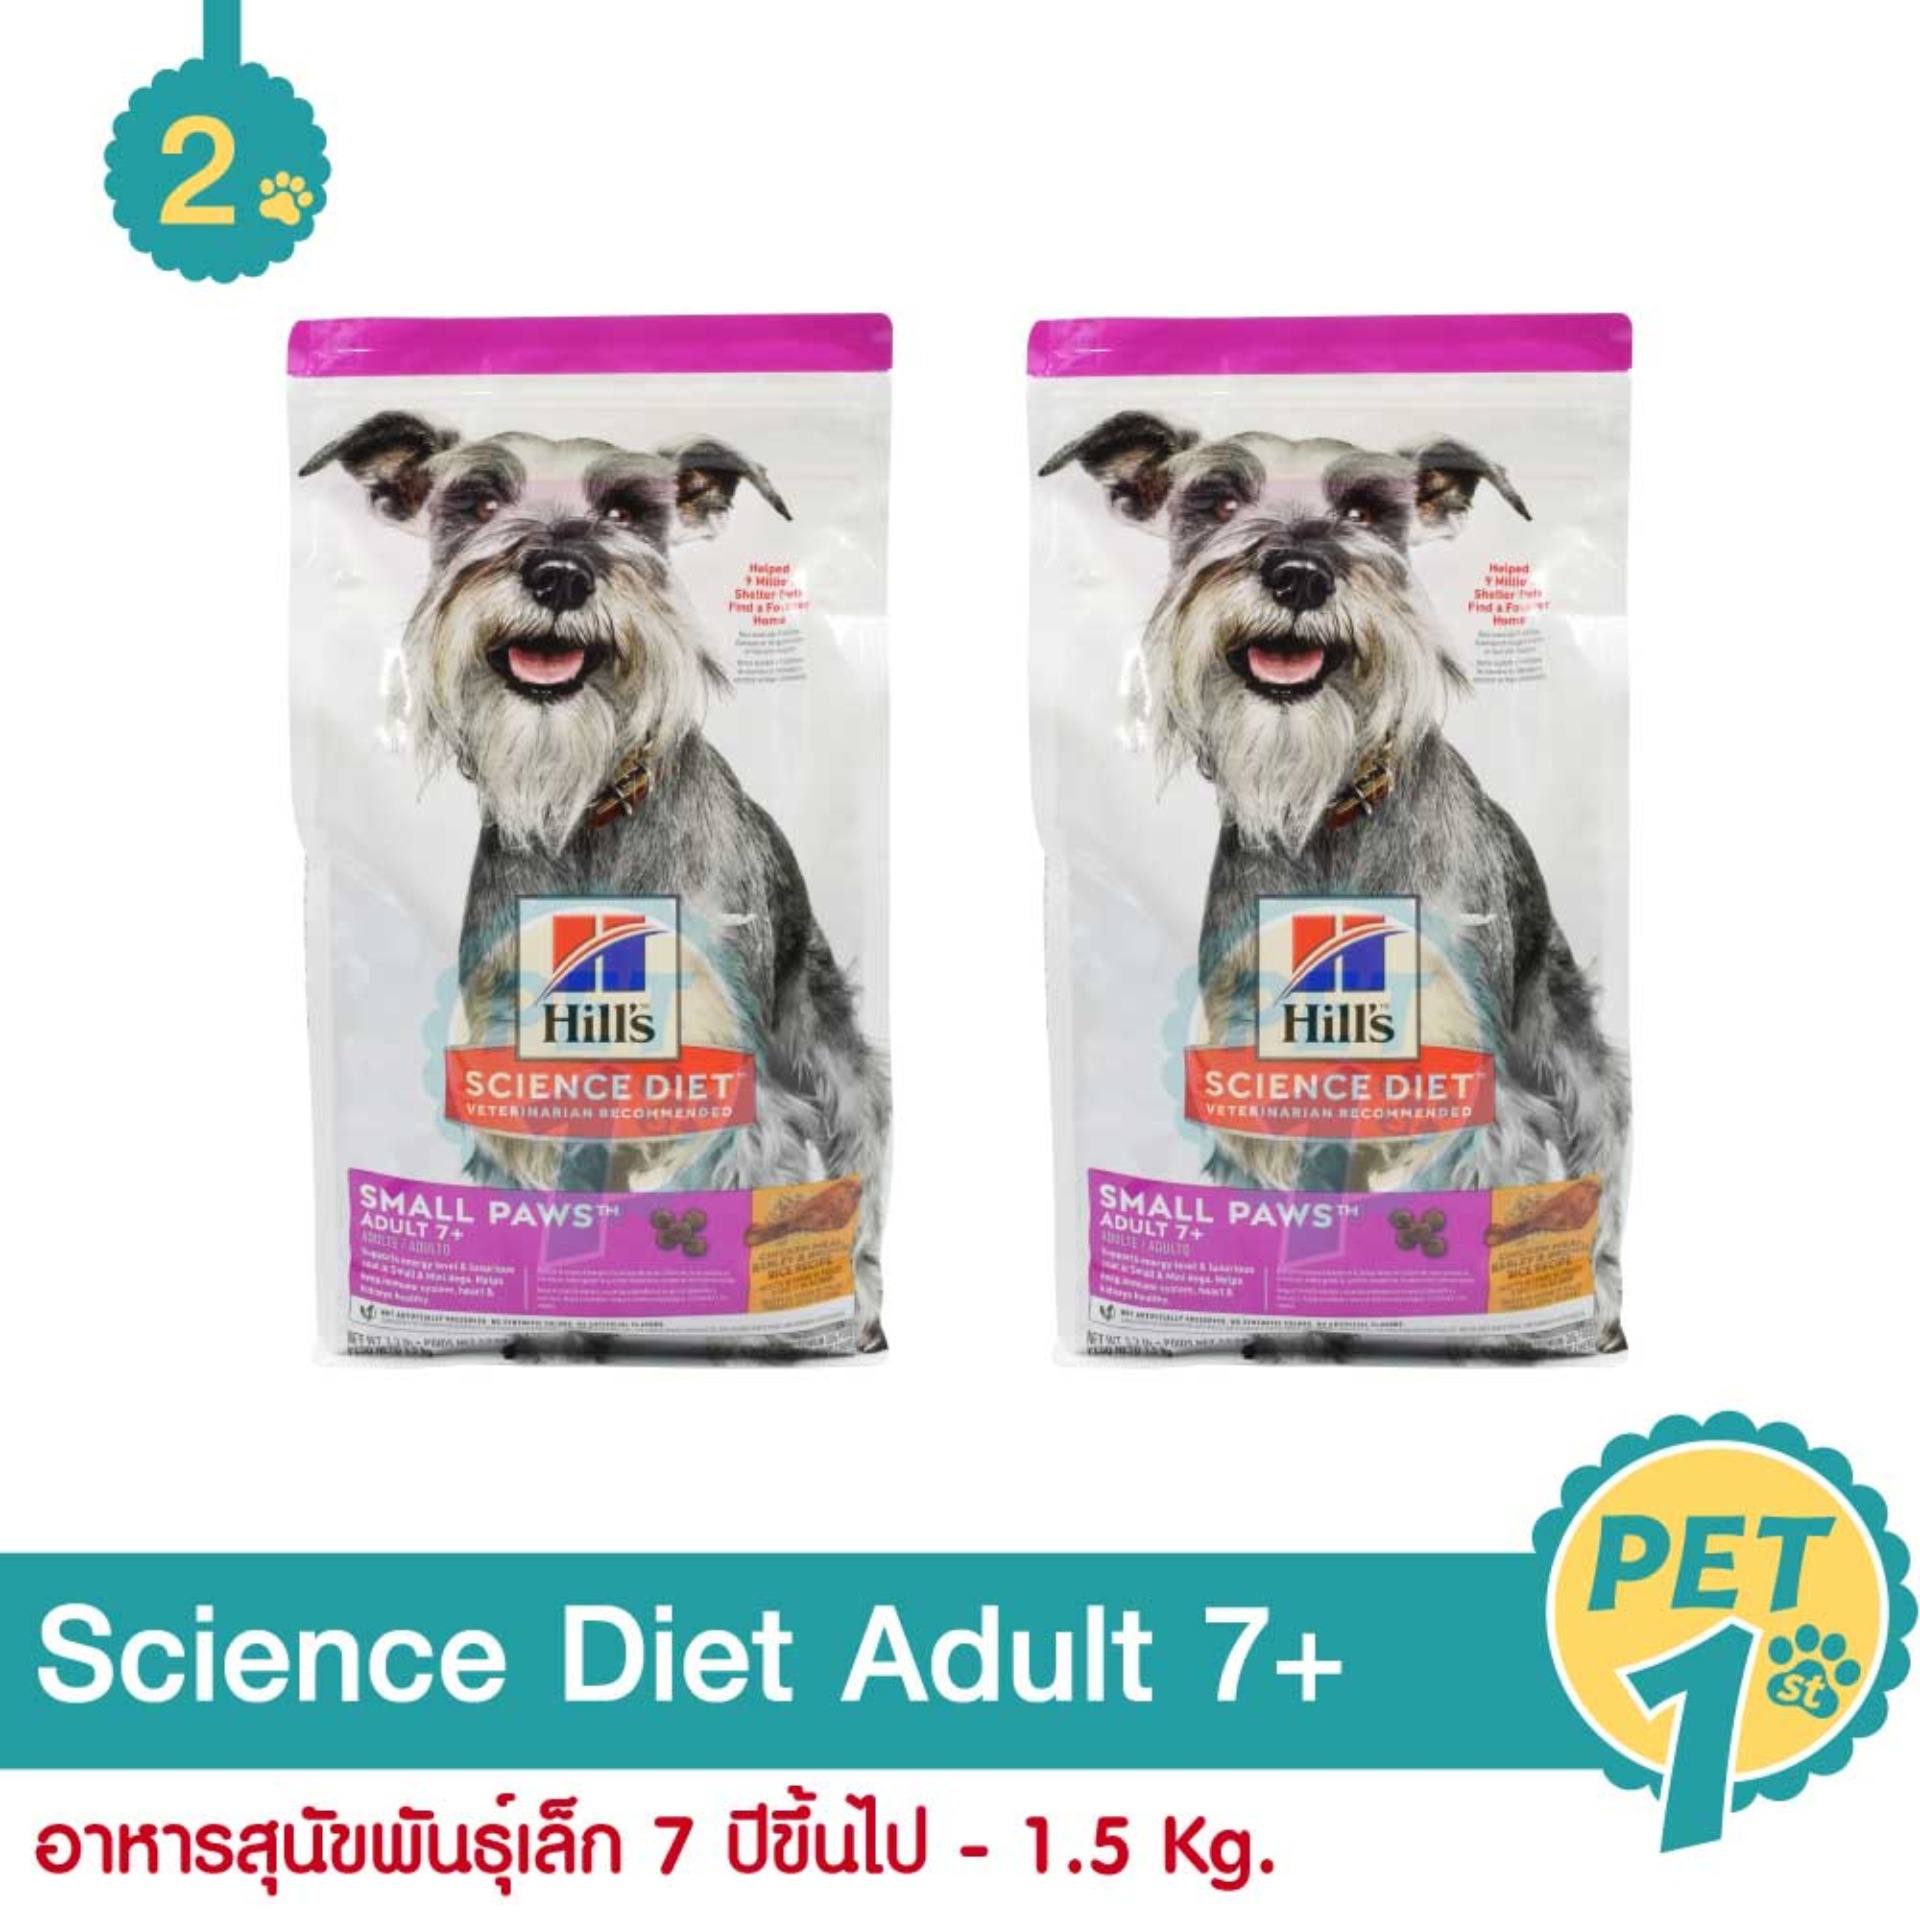 Science Diet Small Paws Adult 7+ อาหารสุนัข ที่มีโภชนาการที่สมดุล ย่อยง่าย เพื่อสุนัขพันธุ์เล็ก 7 ปีขึ้นไป 1.5 Kg. - 2 ถุง